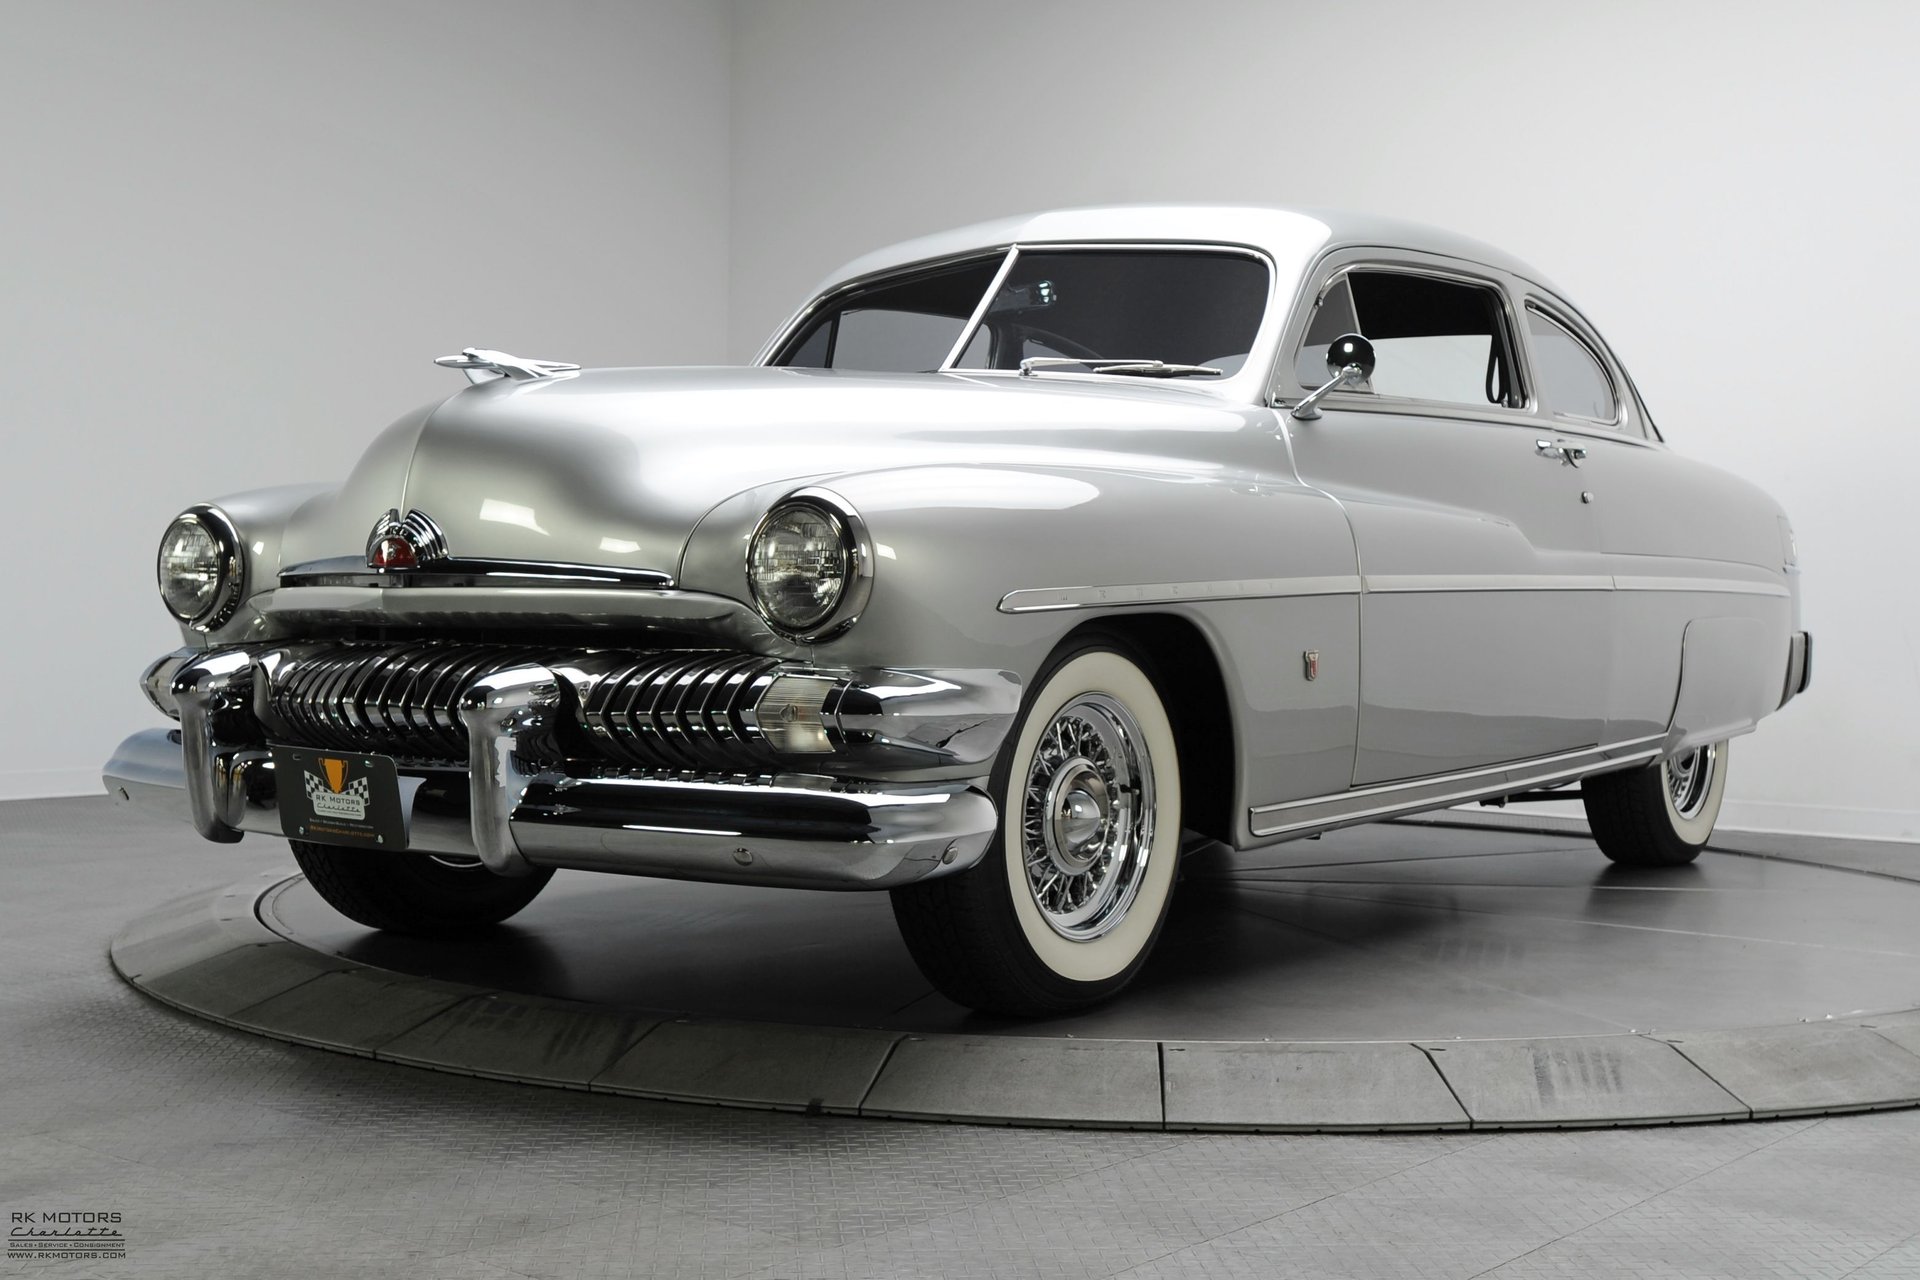 For Sale 1951 Mercury Sedan